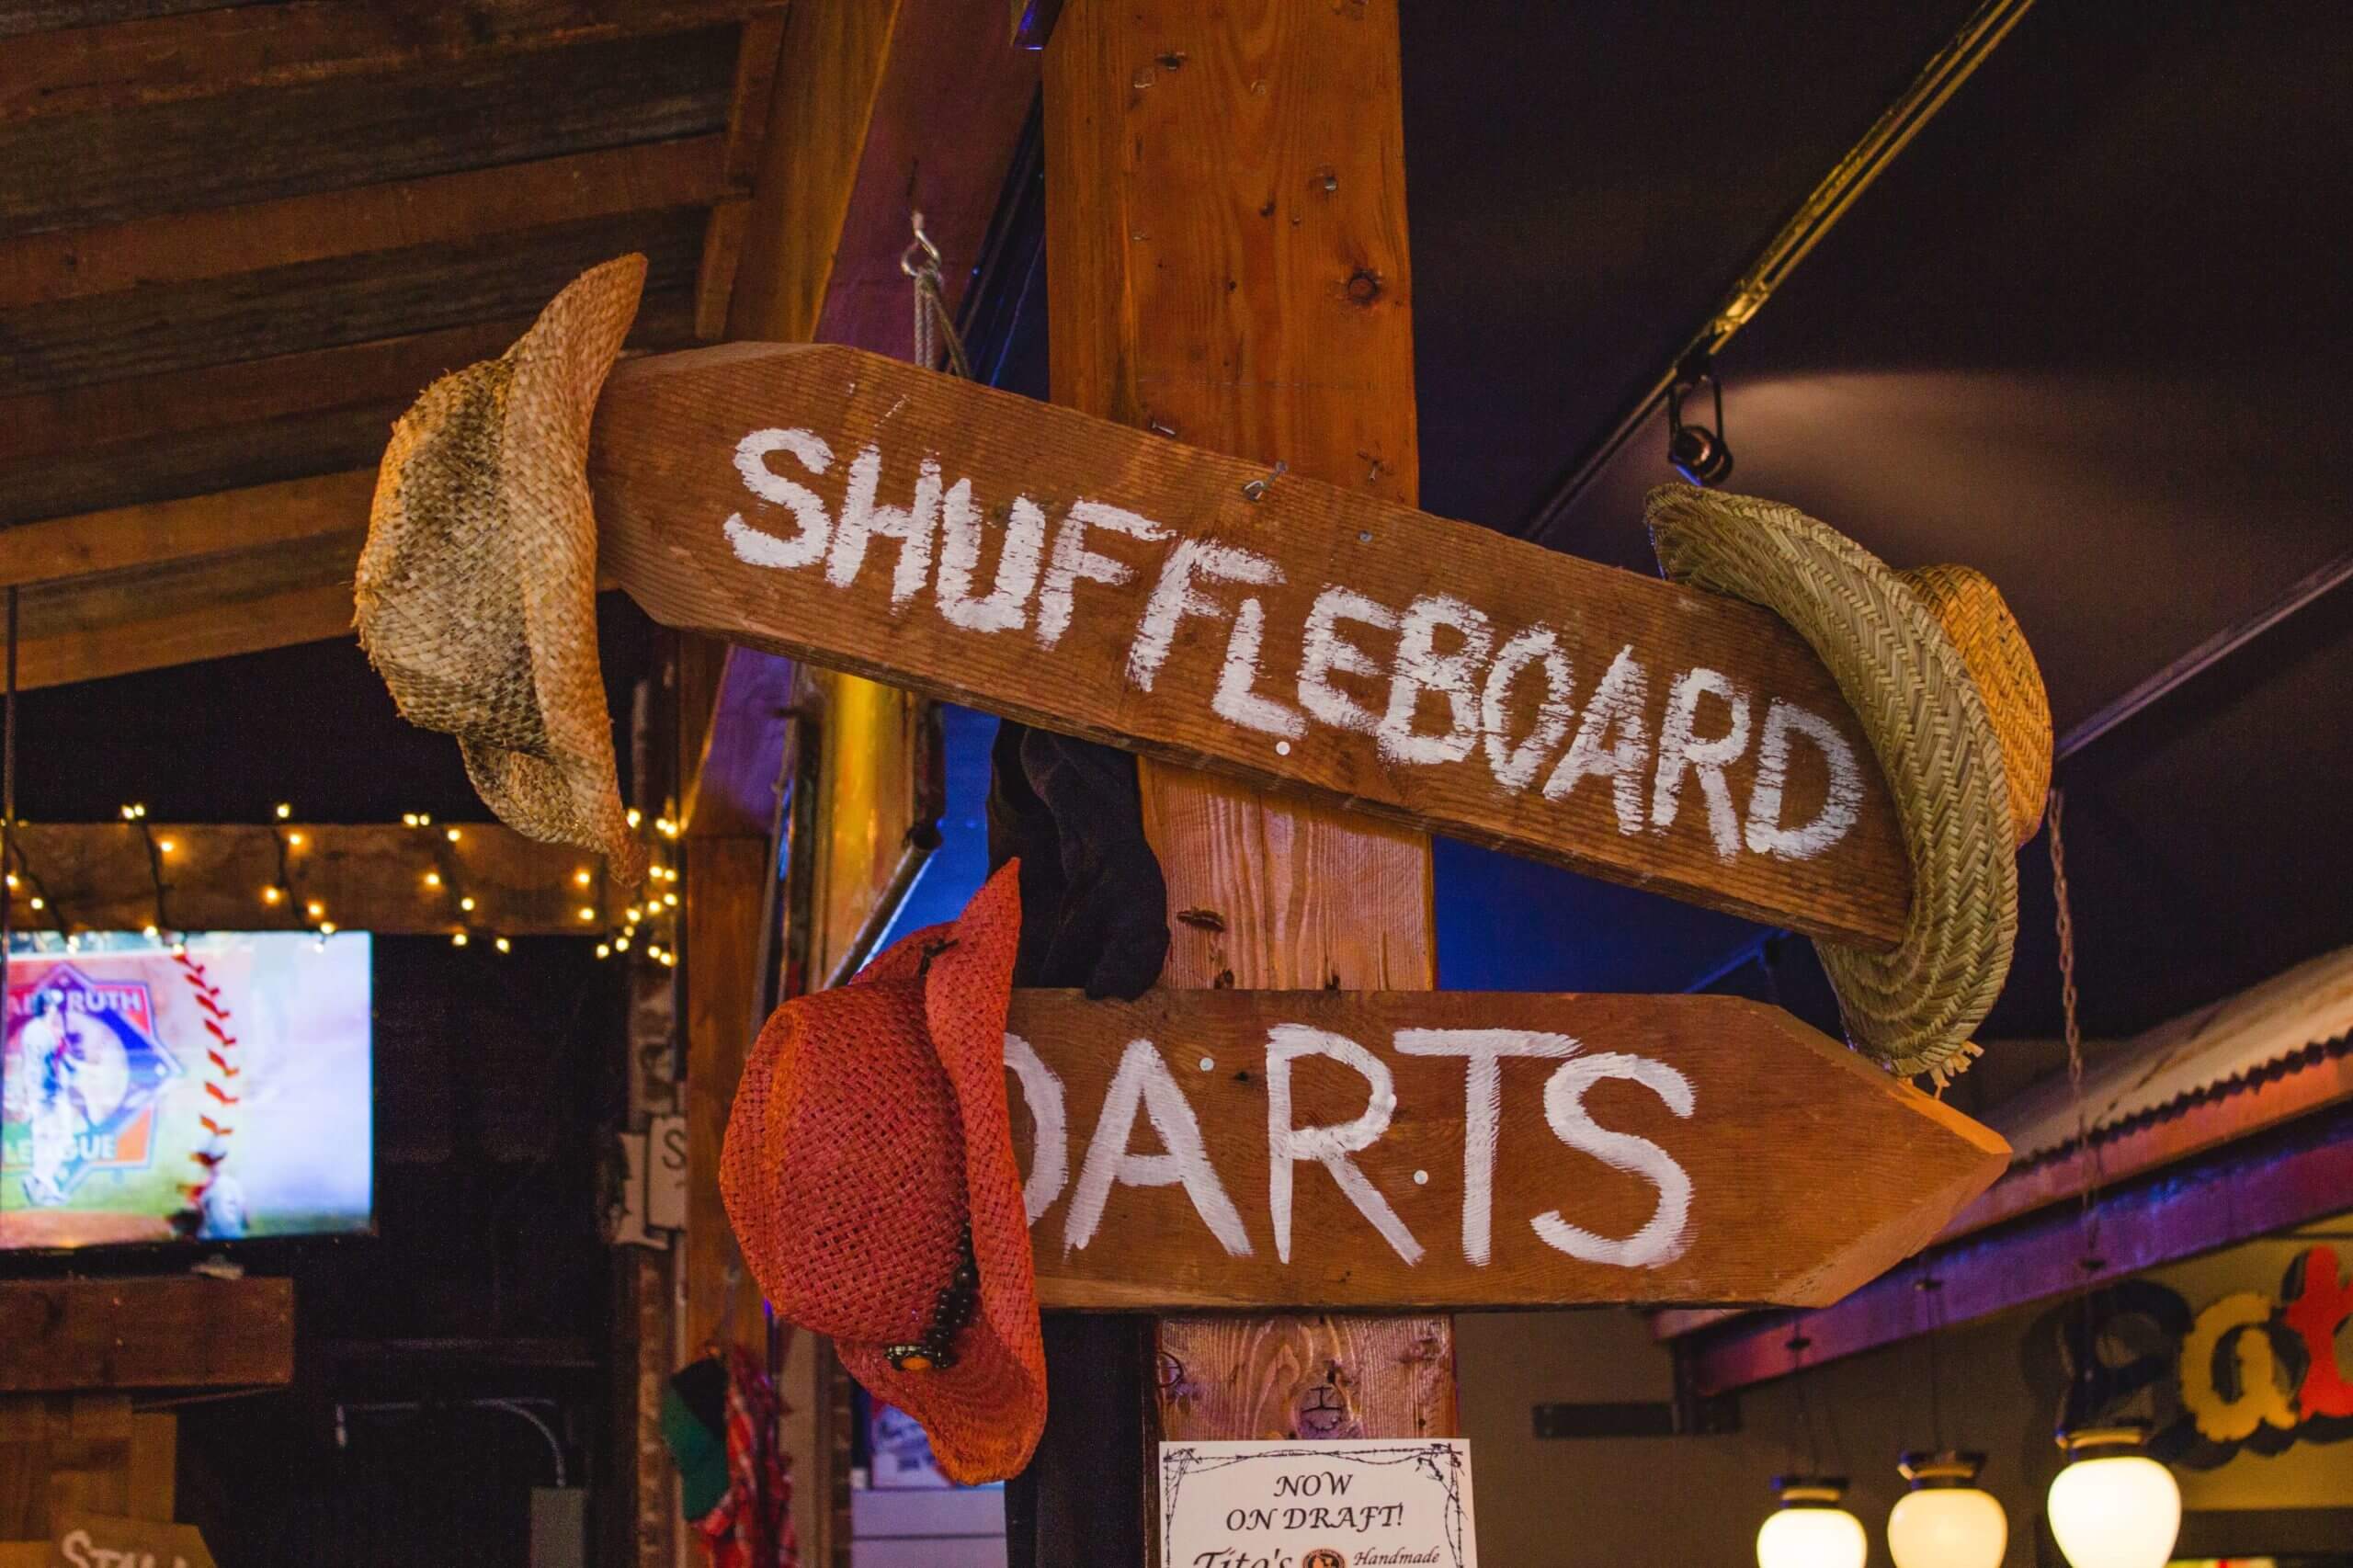 Shingletown wooden board signs pointing towards shuffleboard and darts